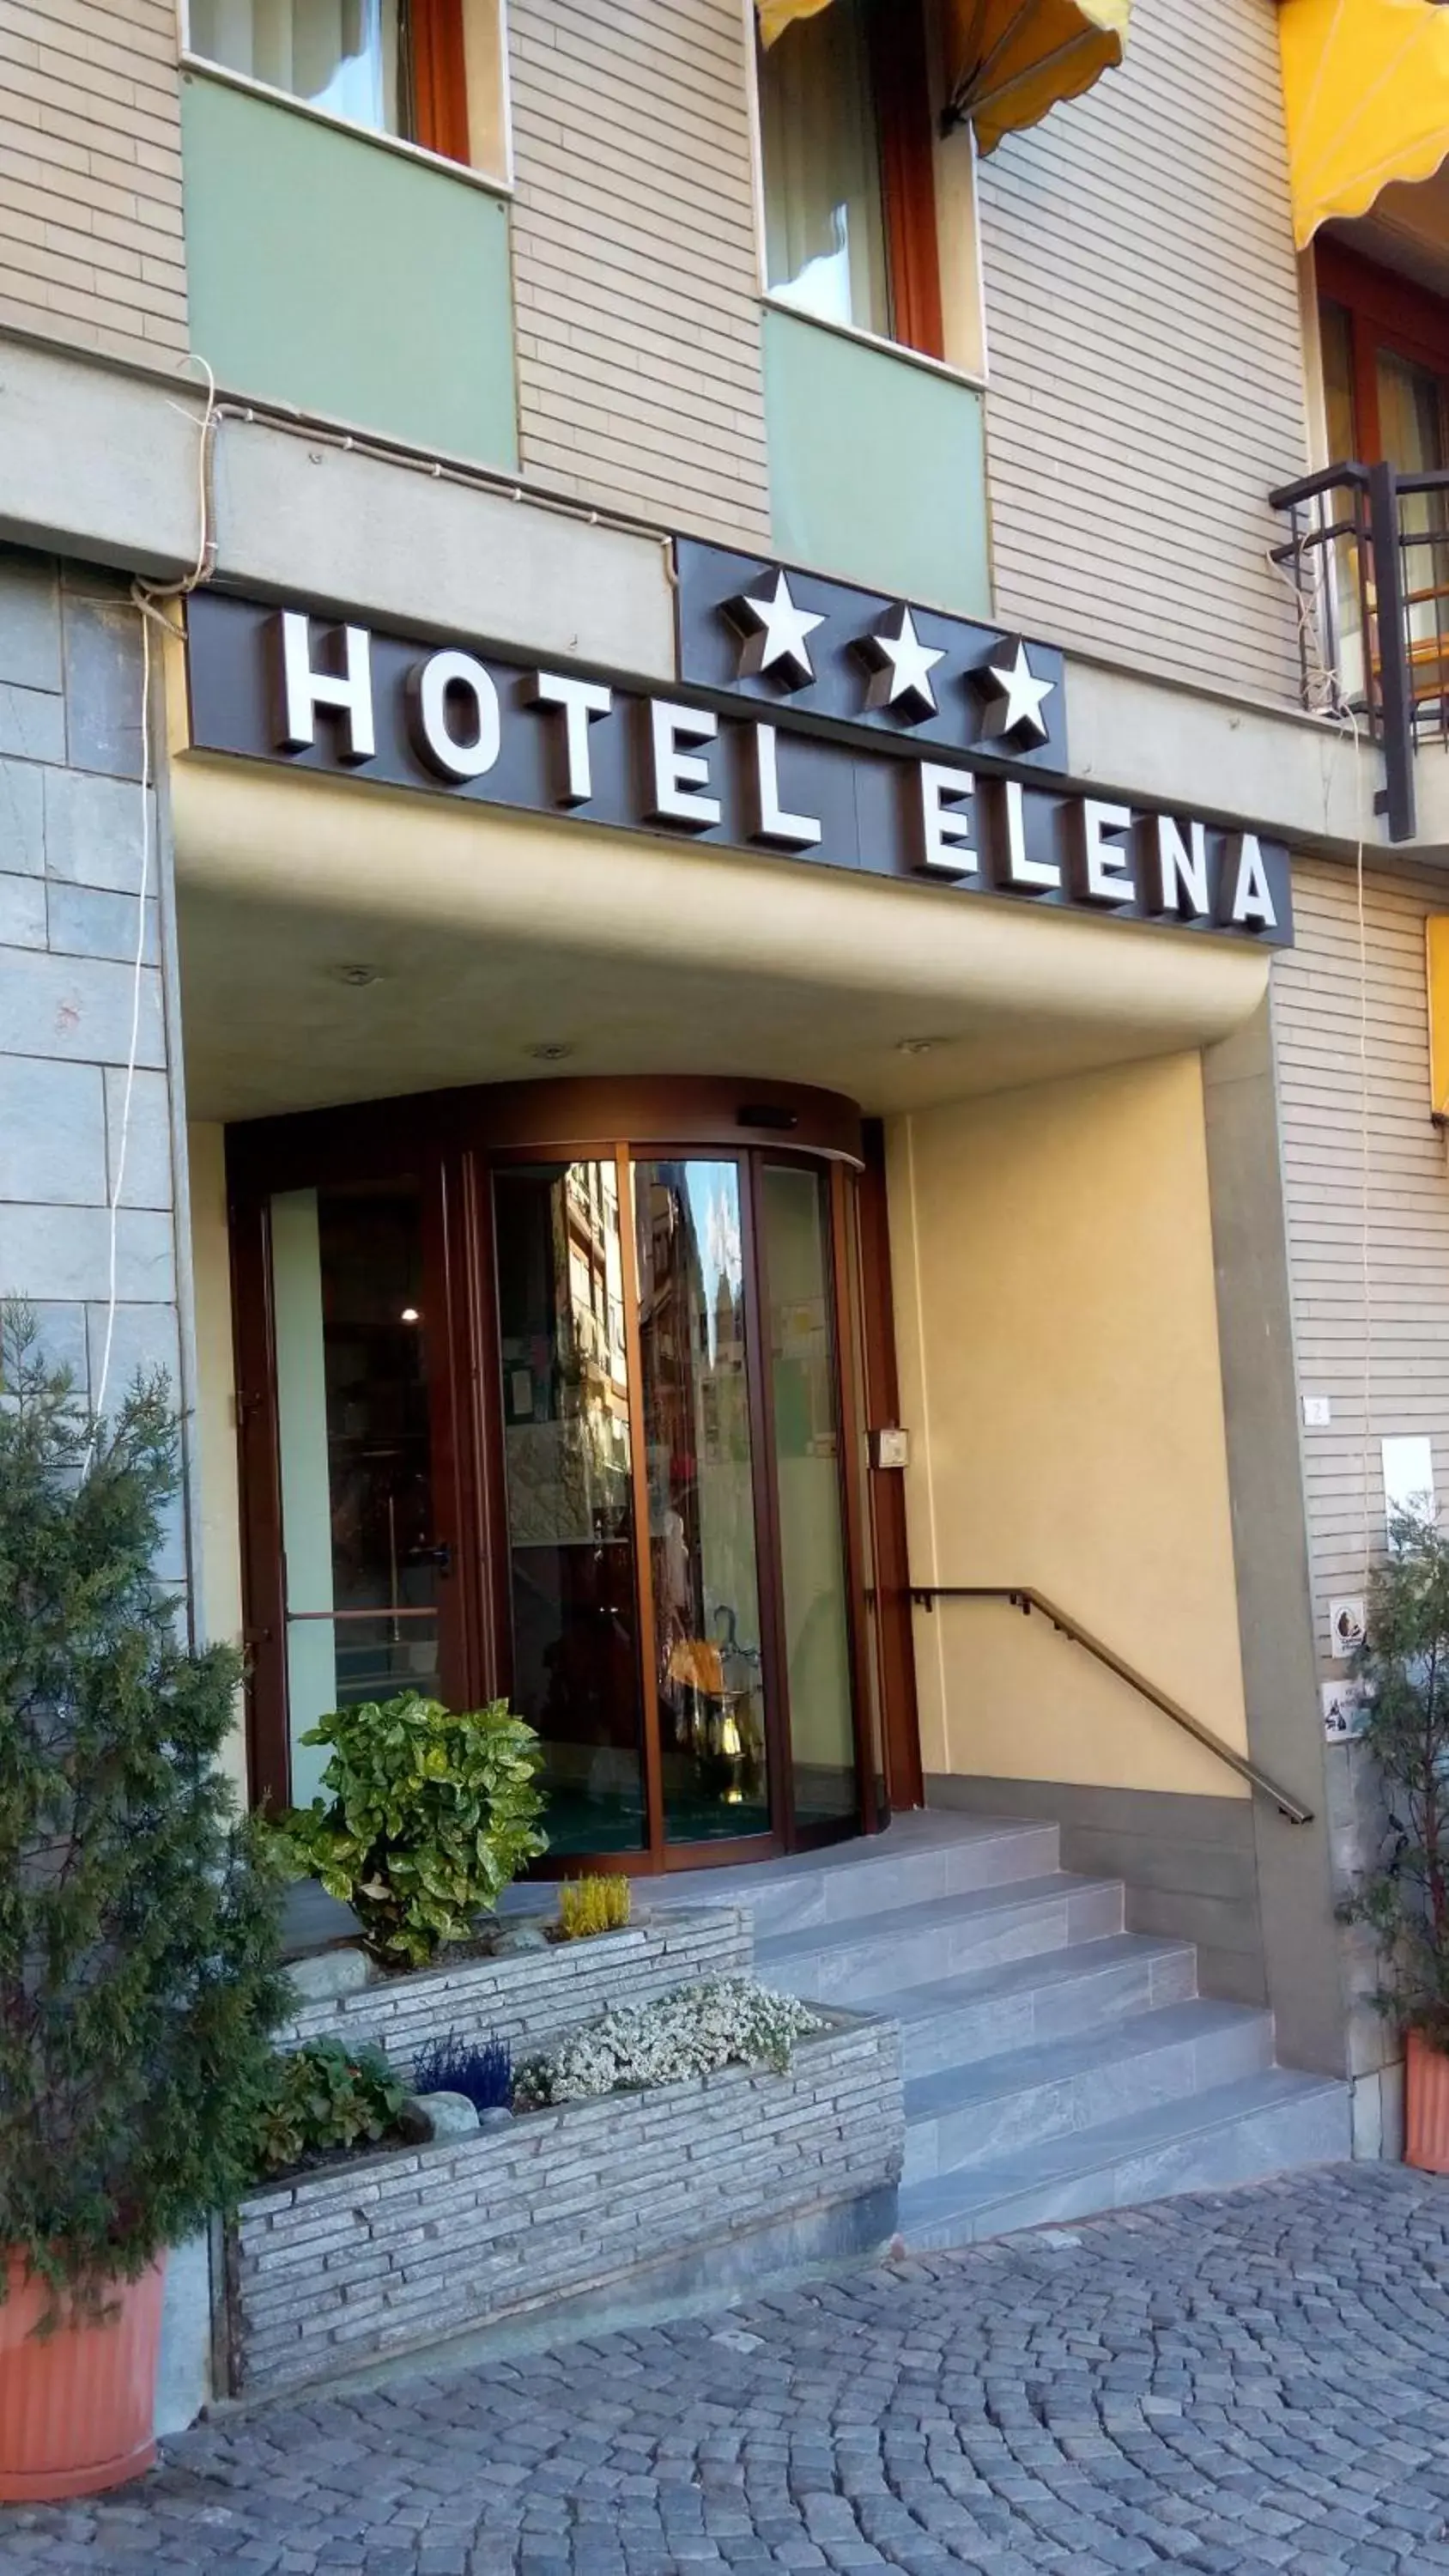 Facade/Entrance in Hotel Elena